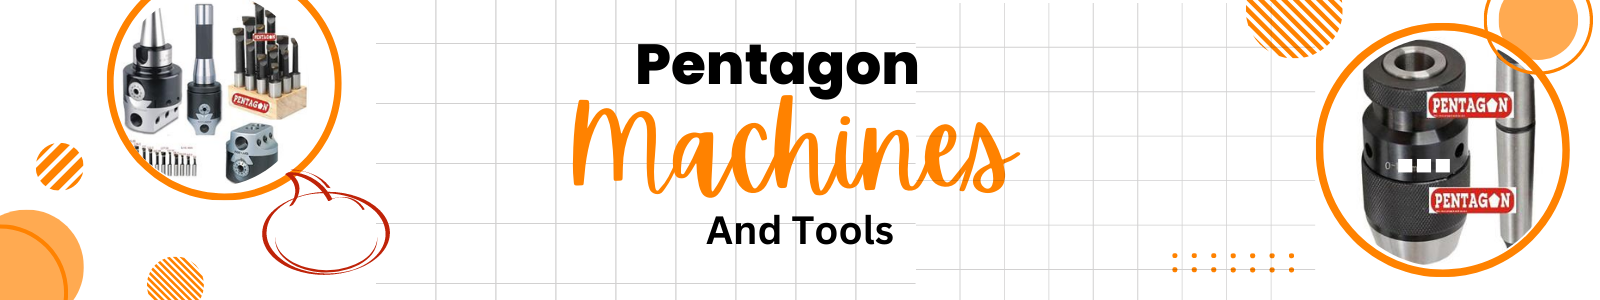 Pentagon Machines and Tools